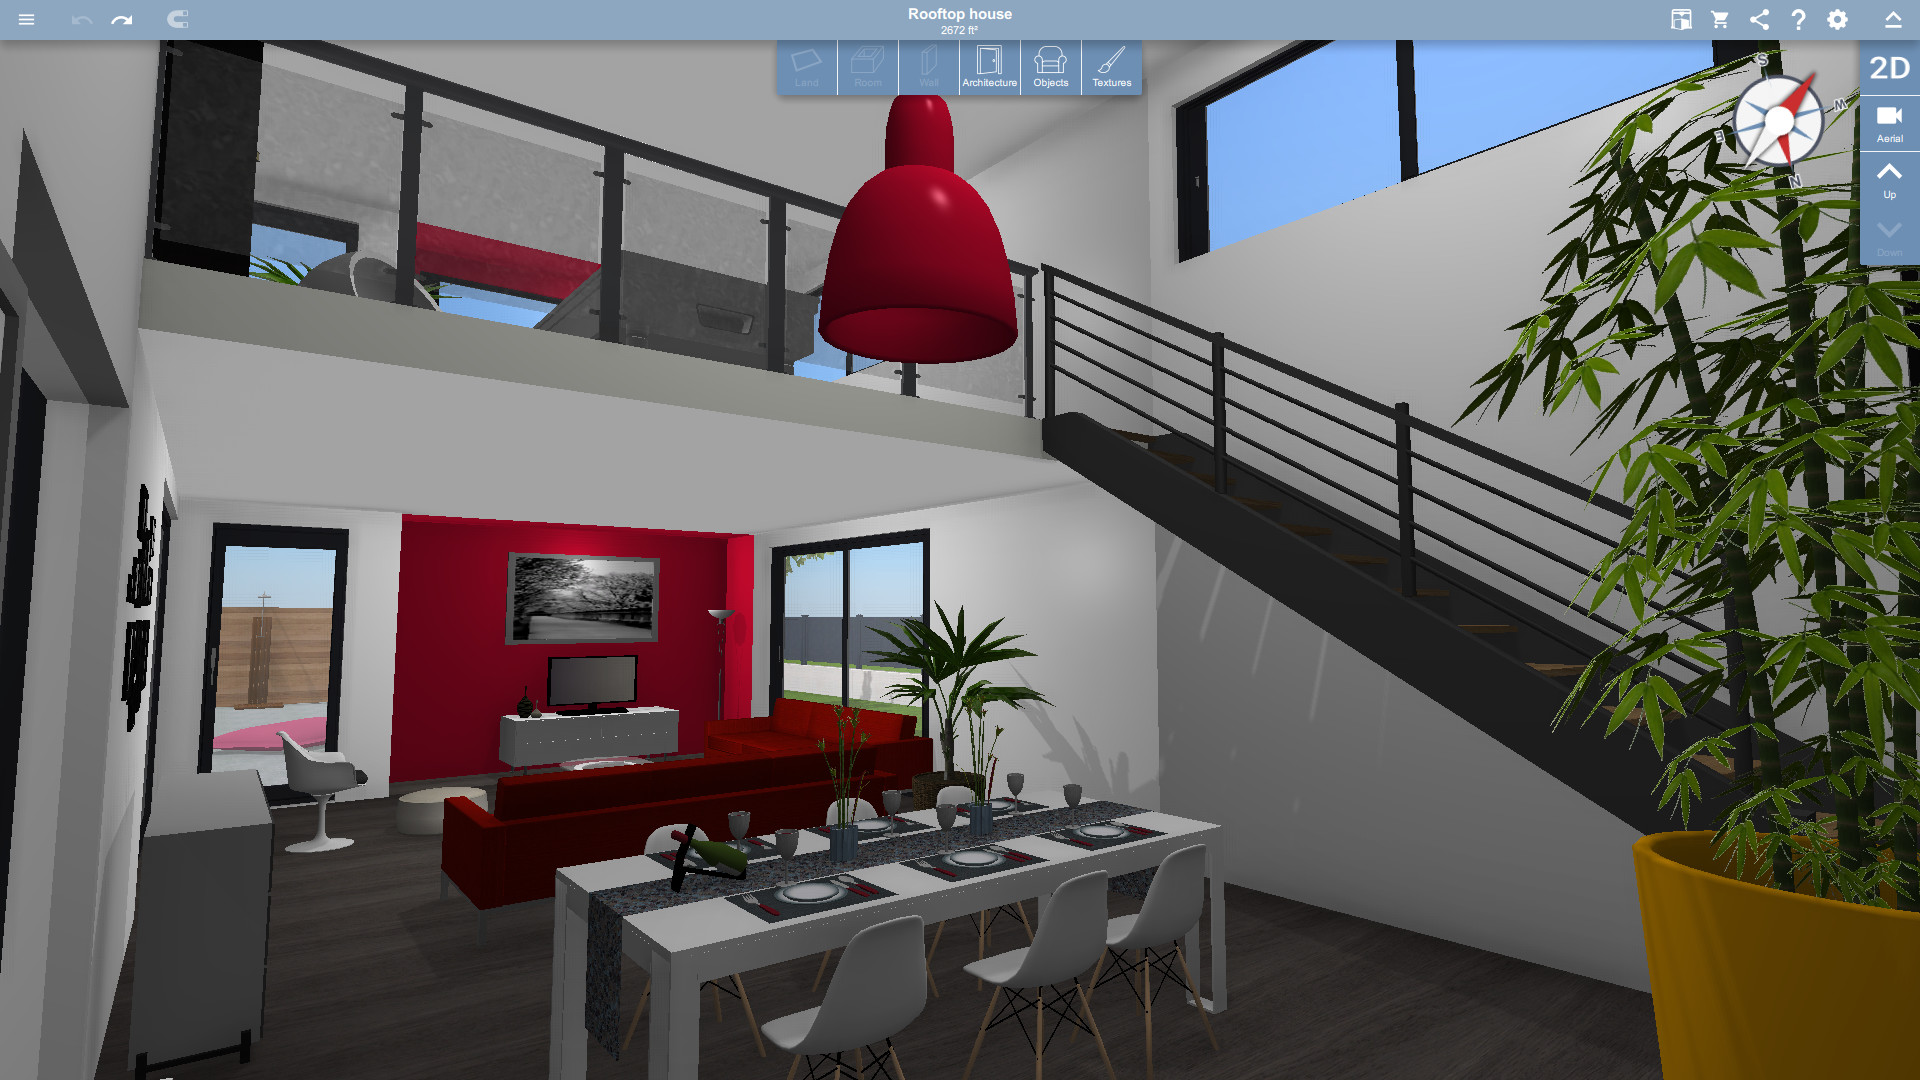 3D House Design Online Game - 3d design house games online. - Miiasiina